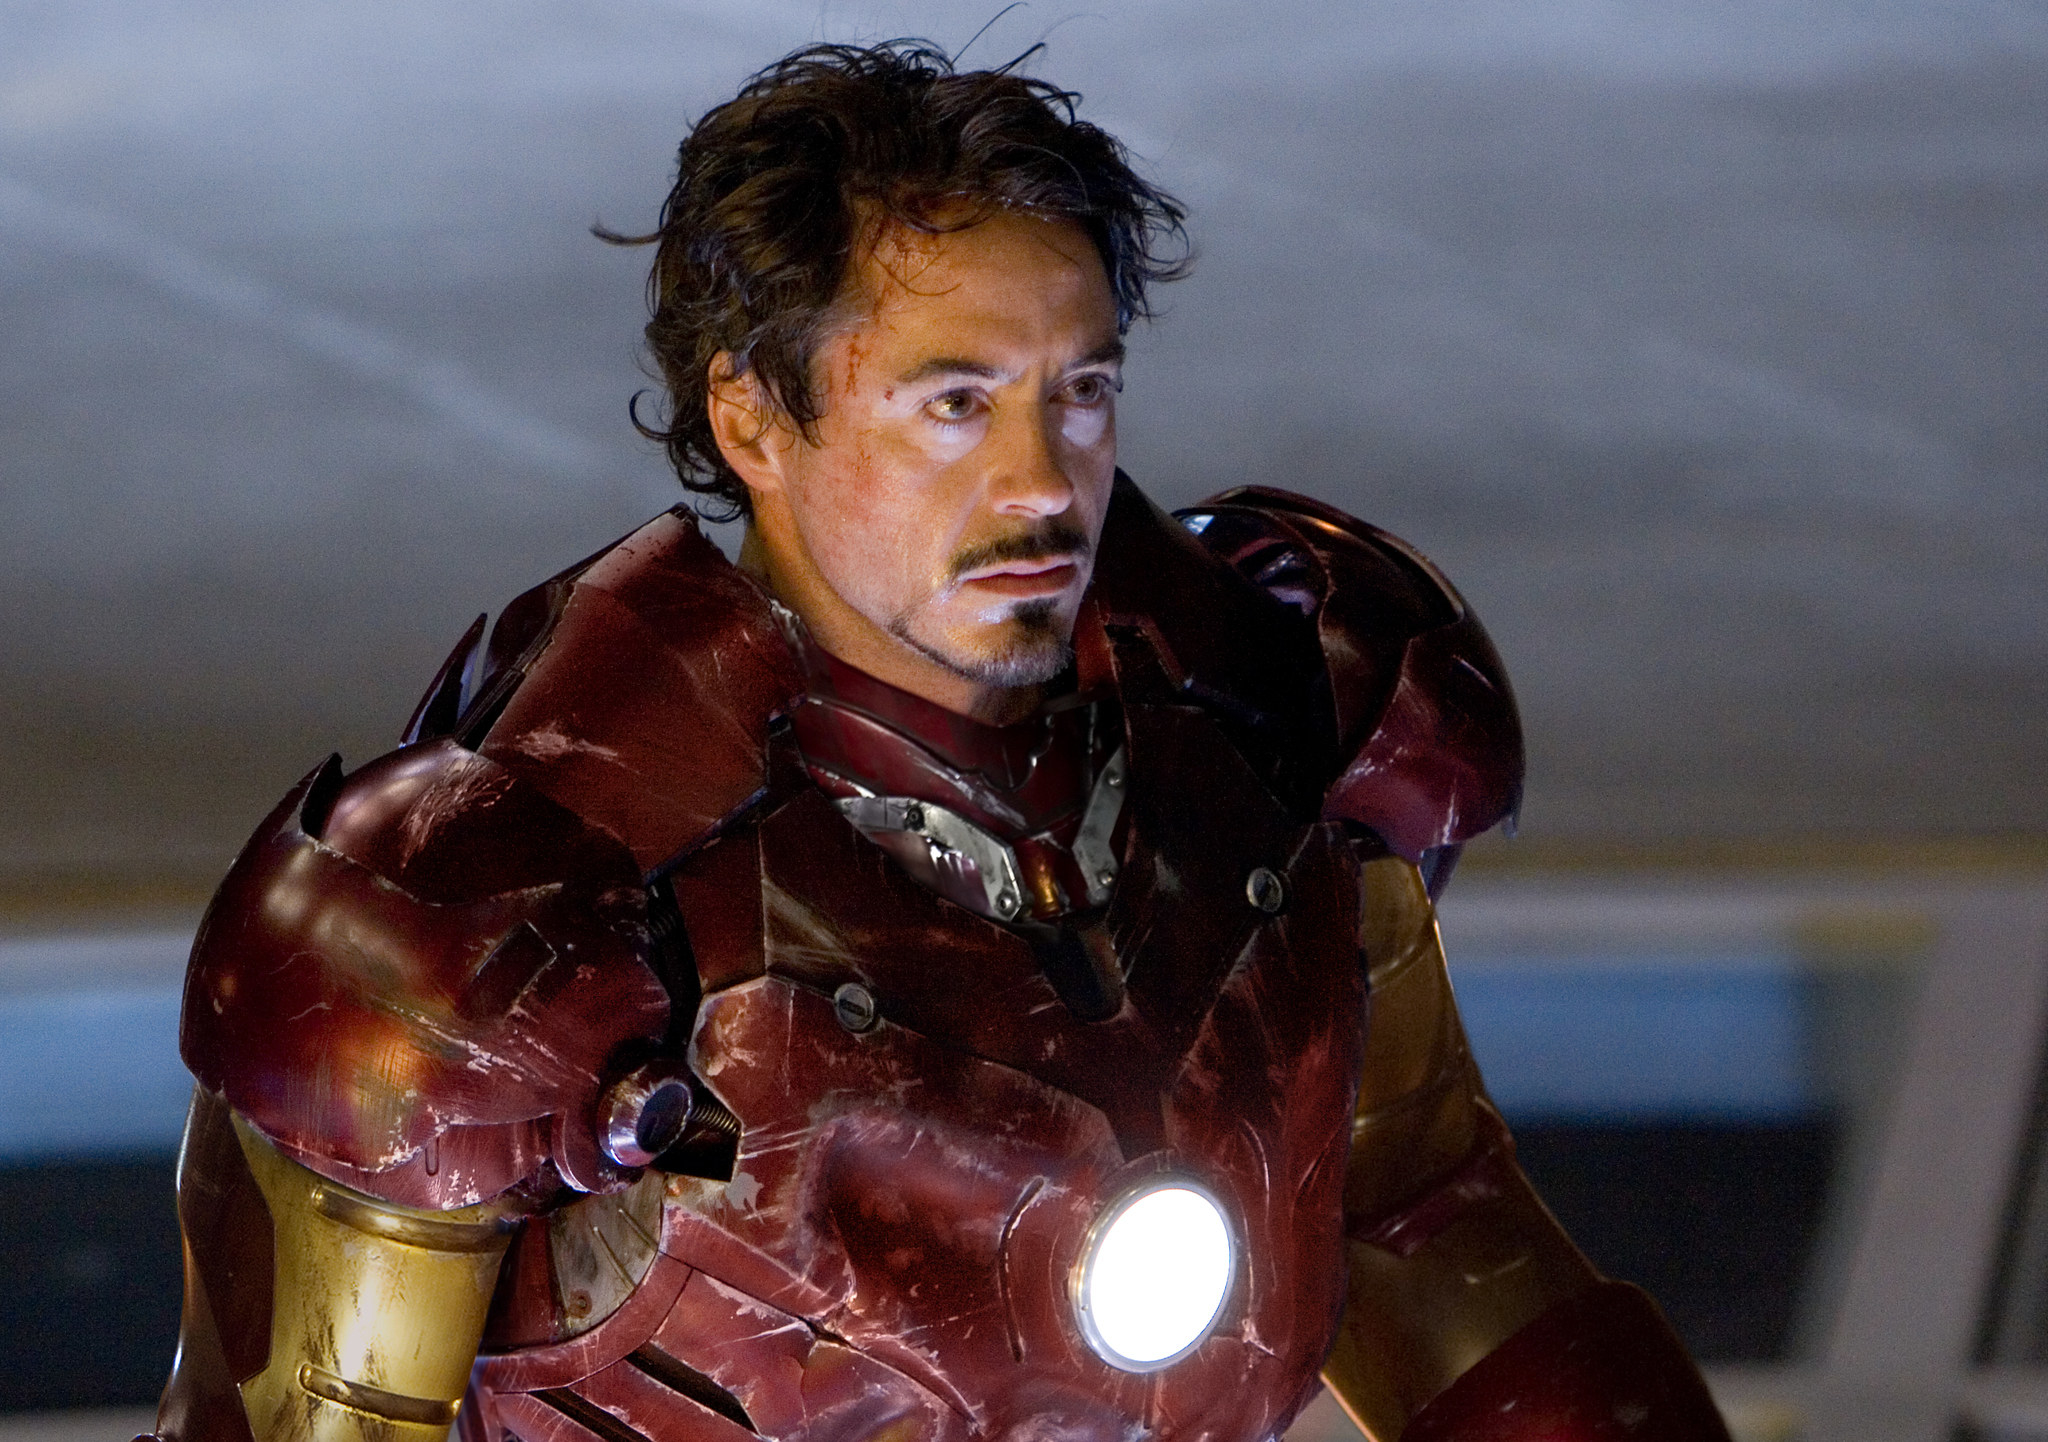 Escena de Iron Man con Robert Downy Jr como Tony Stark